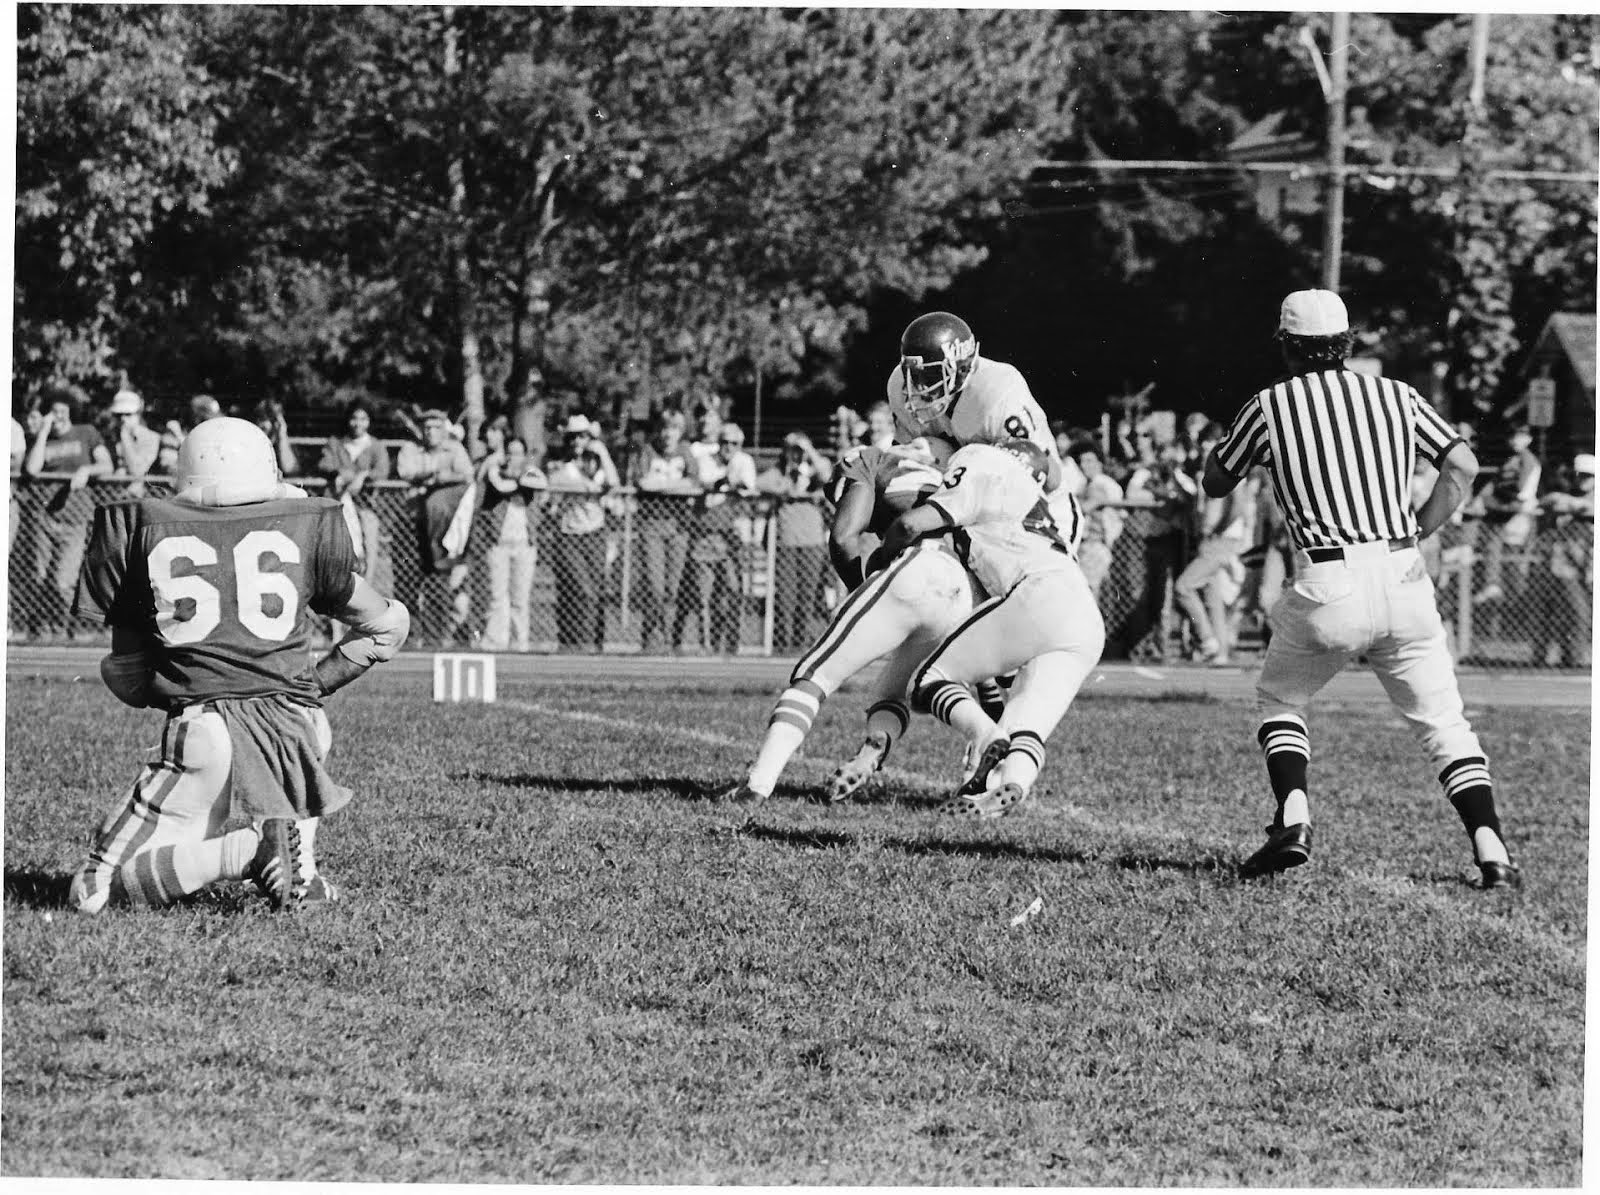 Freshman year making a running back sack 1978 against Cortland State College